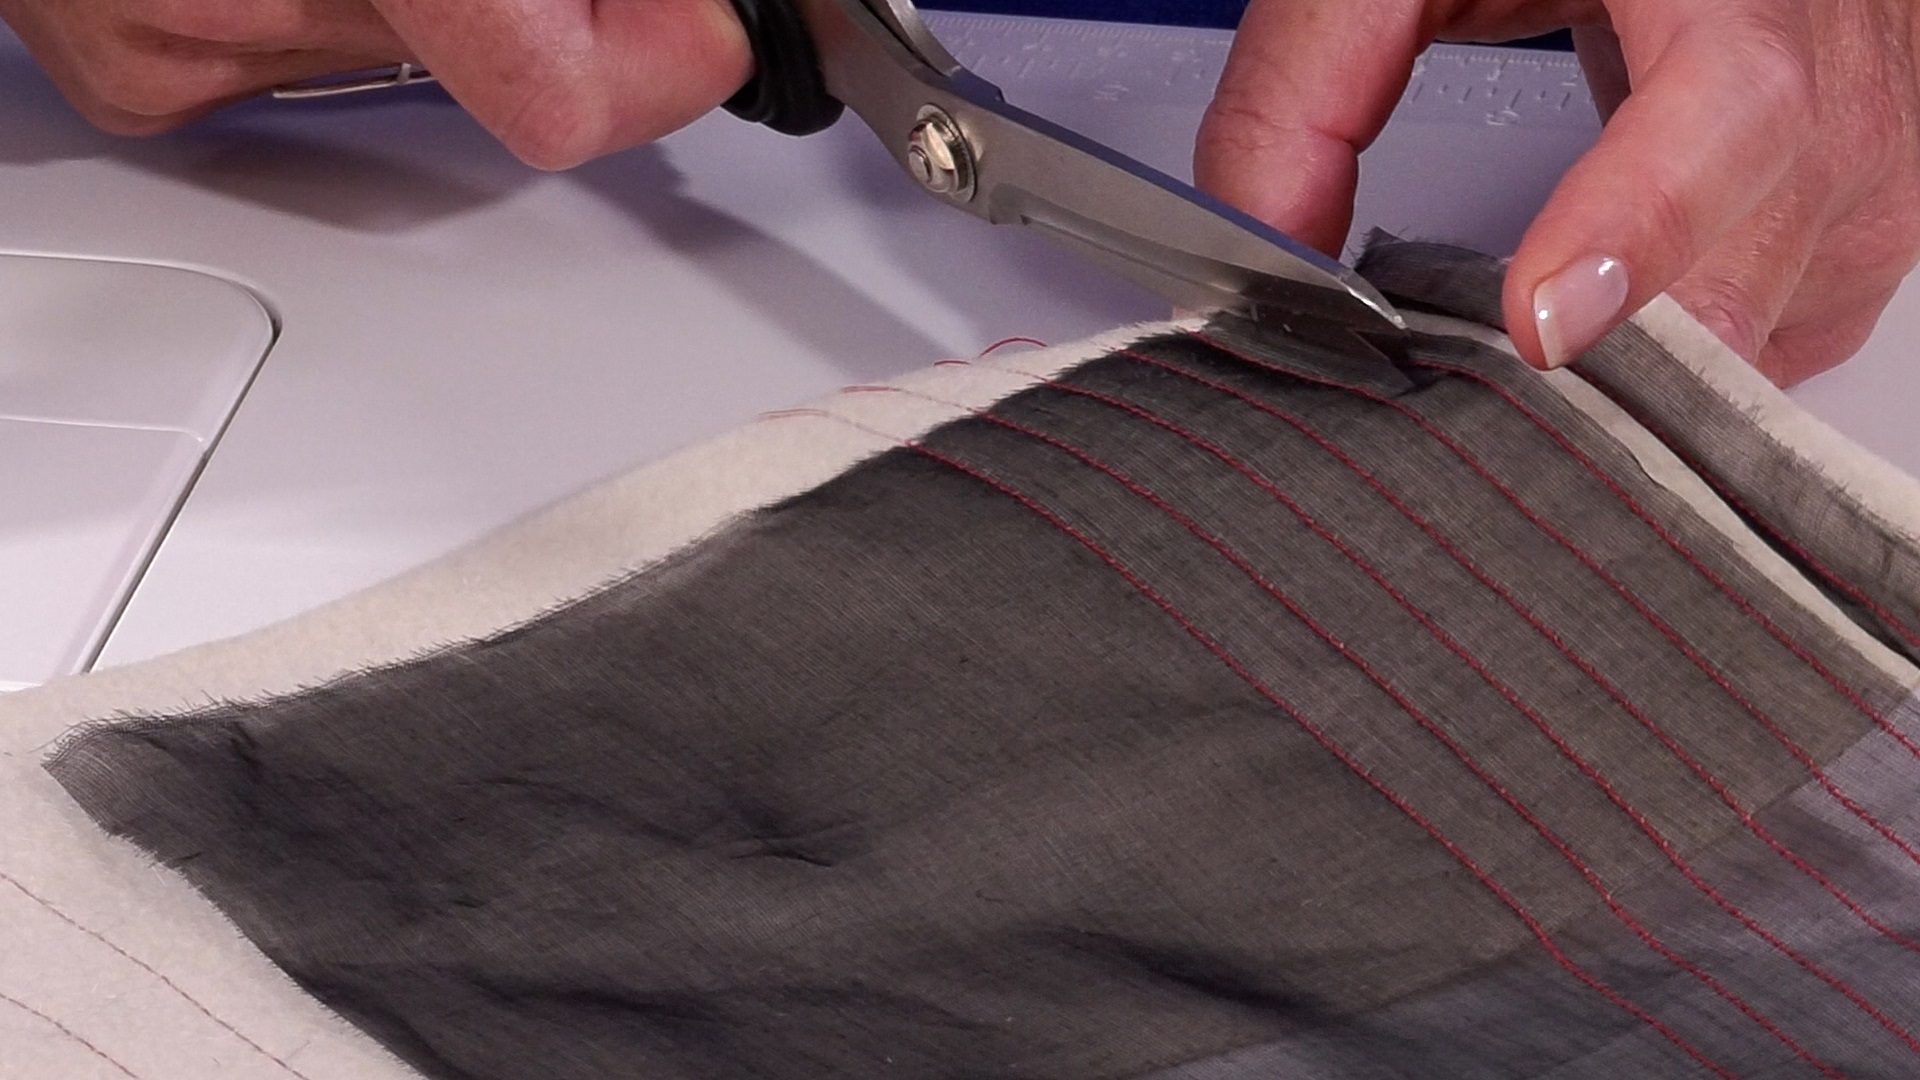 Cutting fabric with scissors